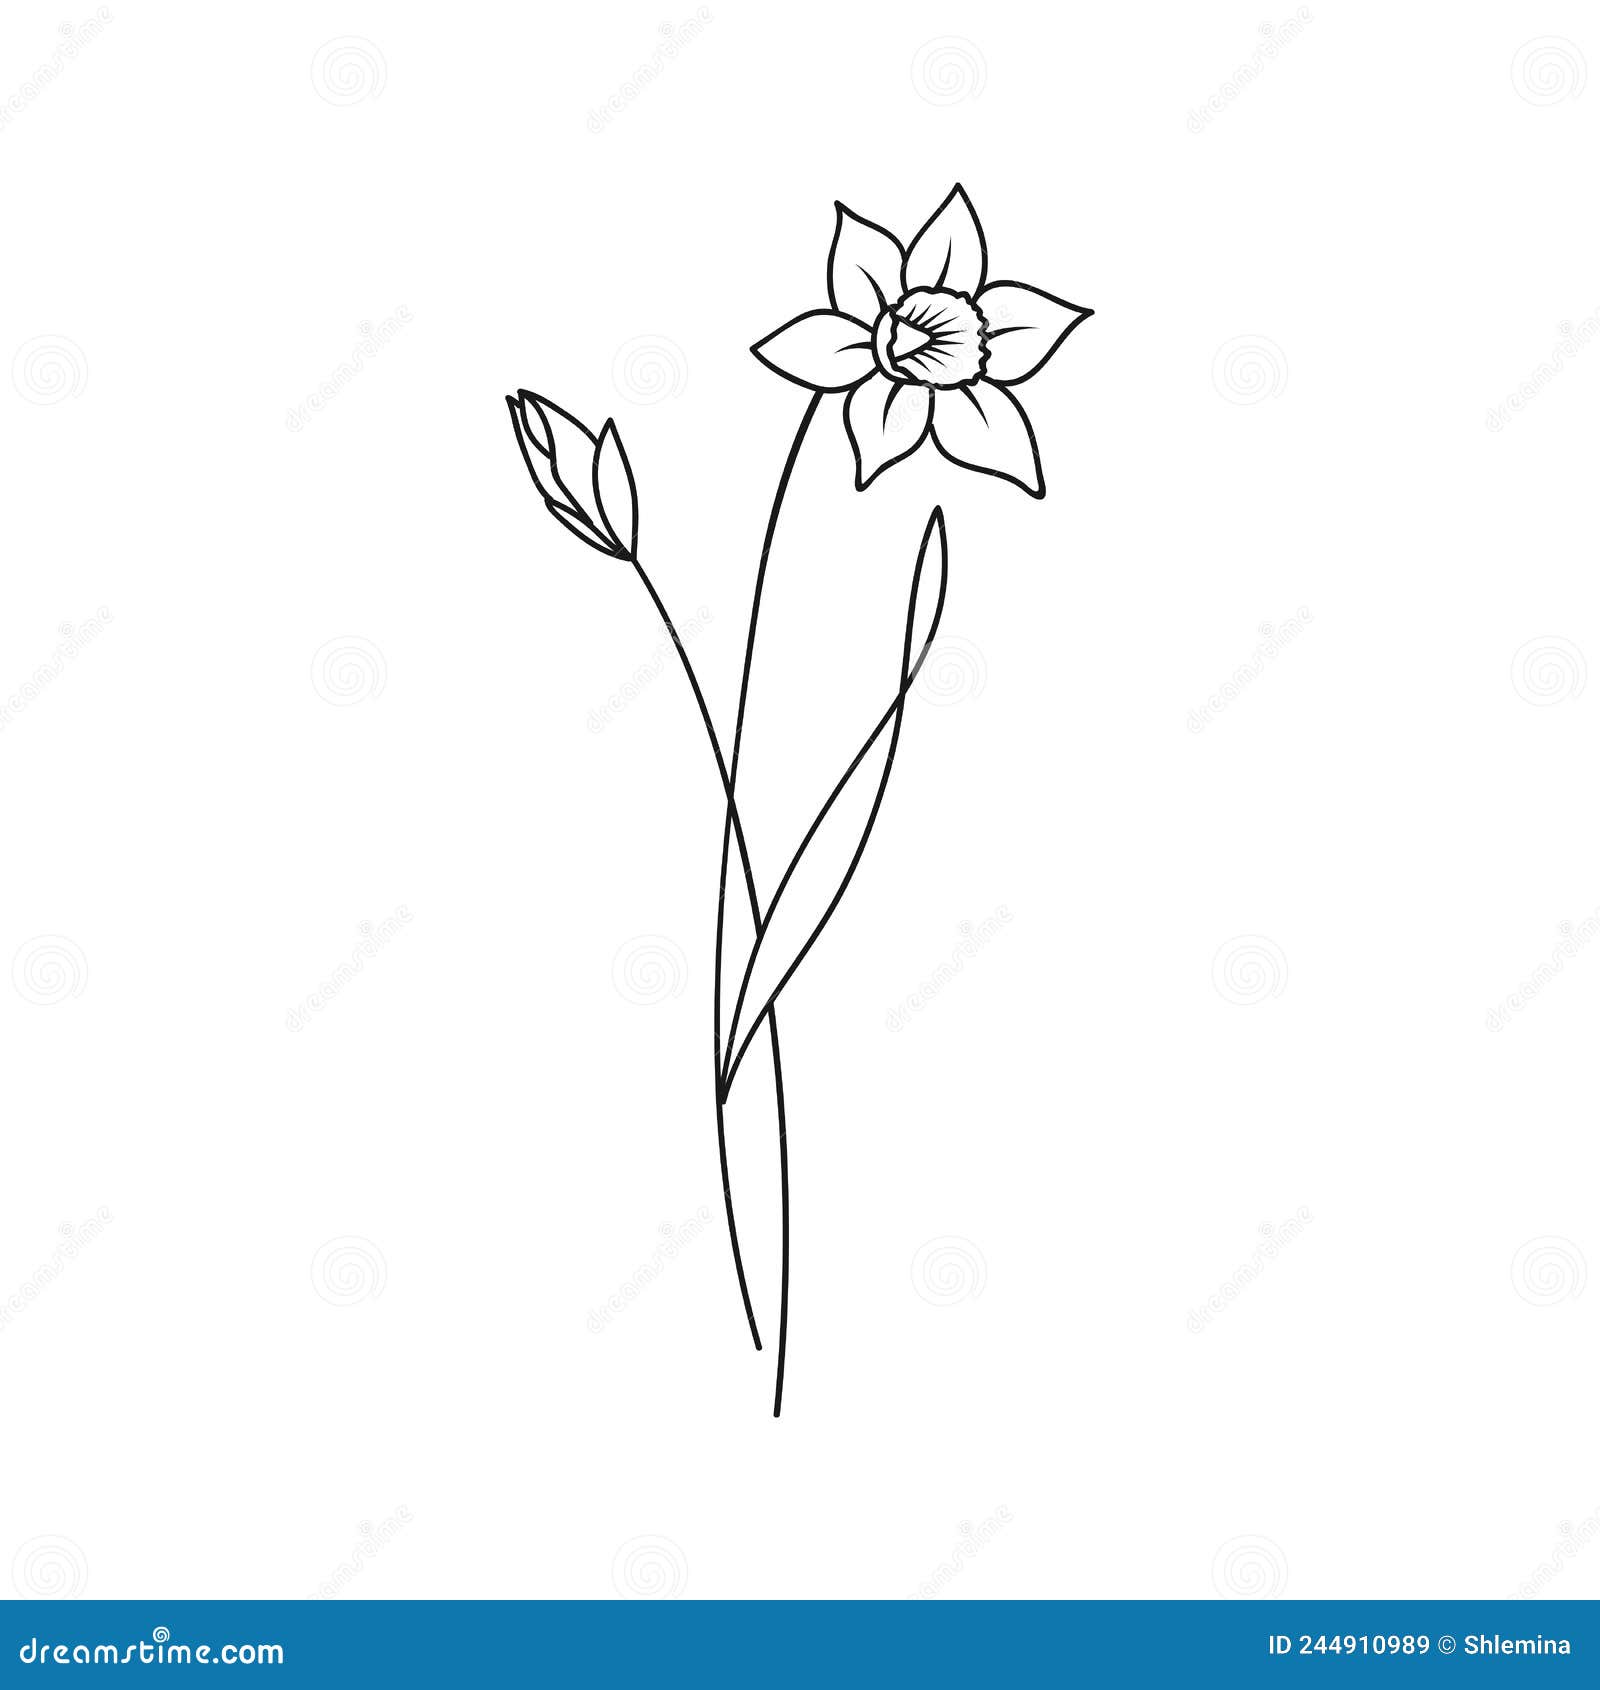 30 December Birth Flower Tattoos Narcissus Flower  100 Tattoos